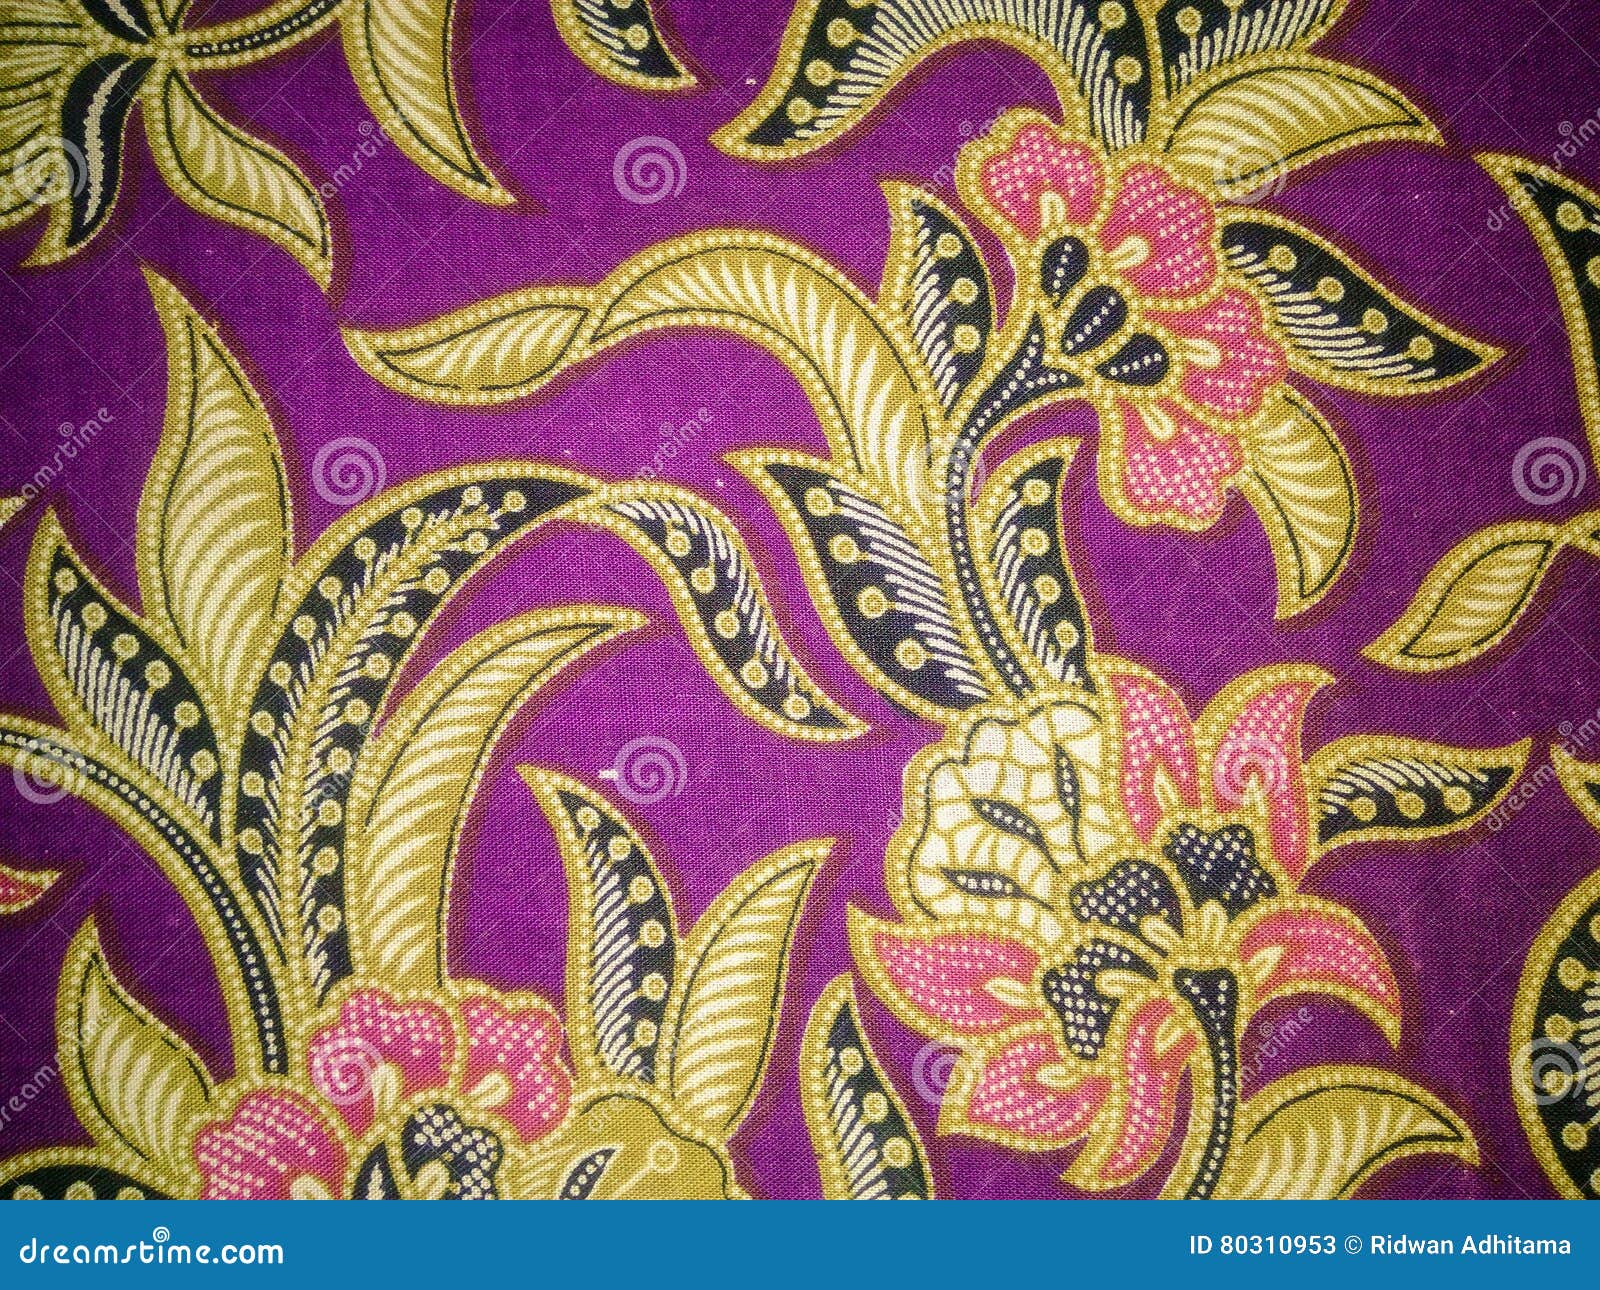  Batik fabric art  stock image Image of backgrounds beauty 